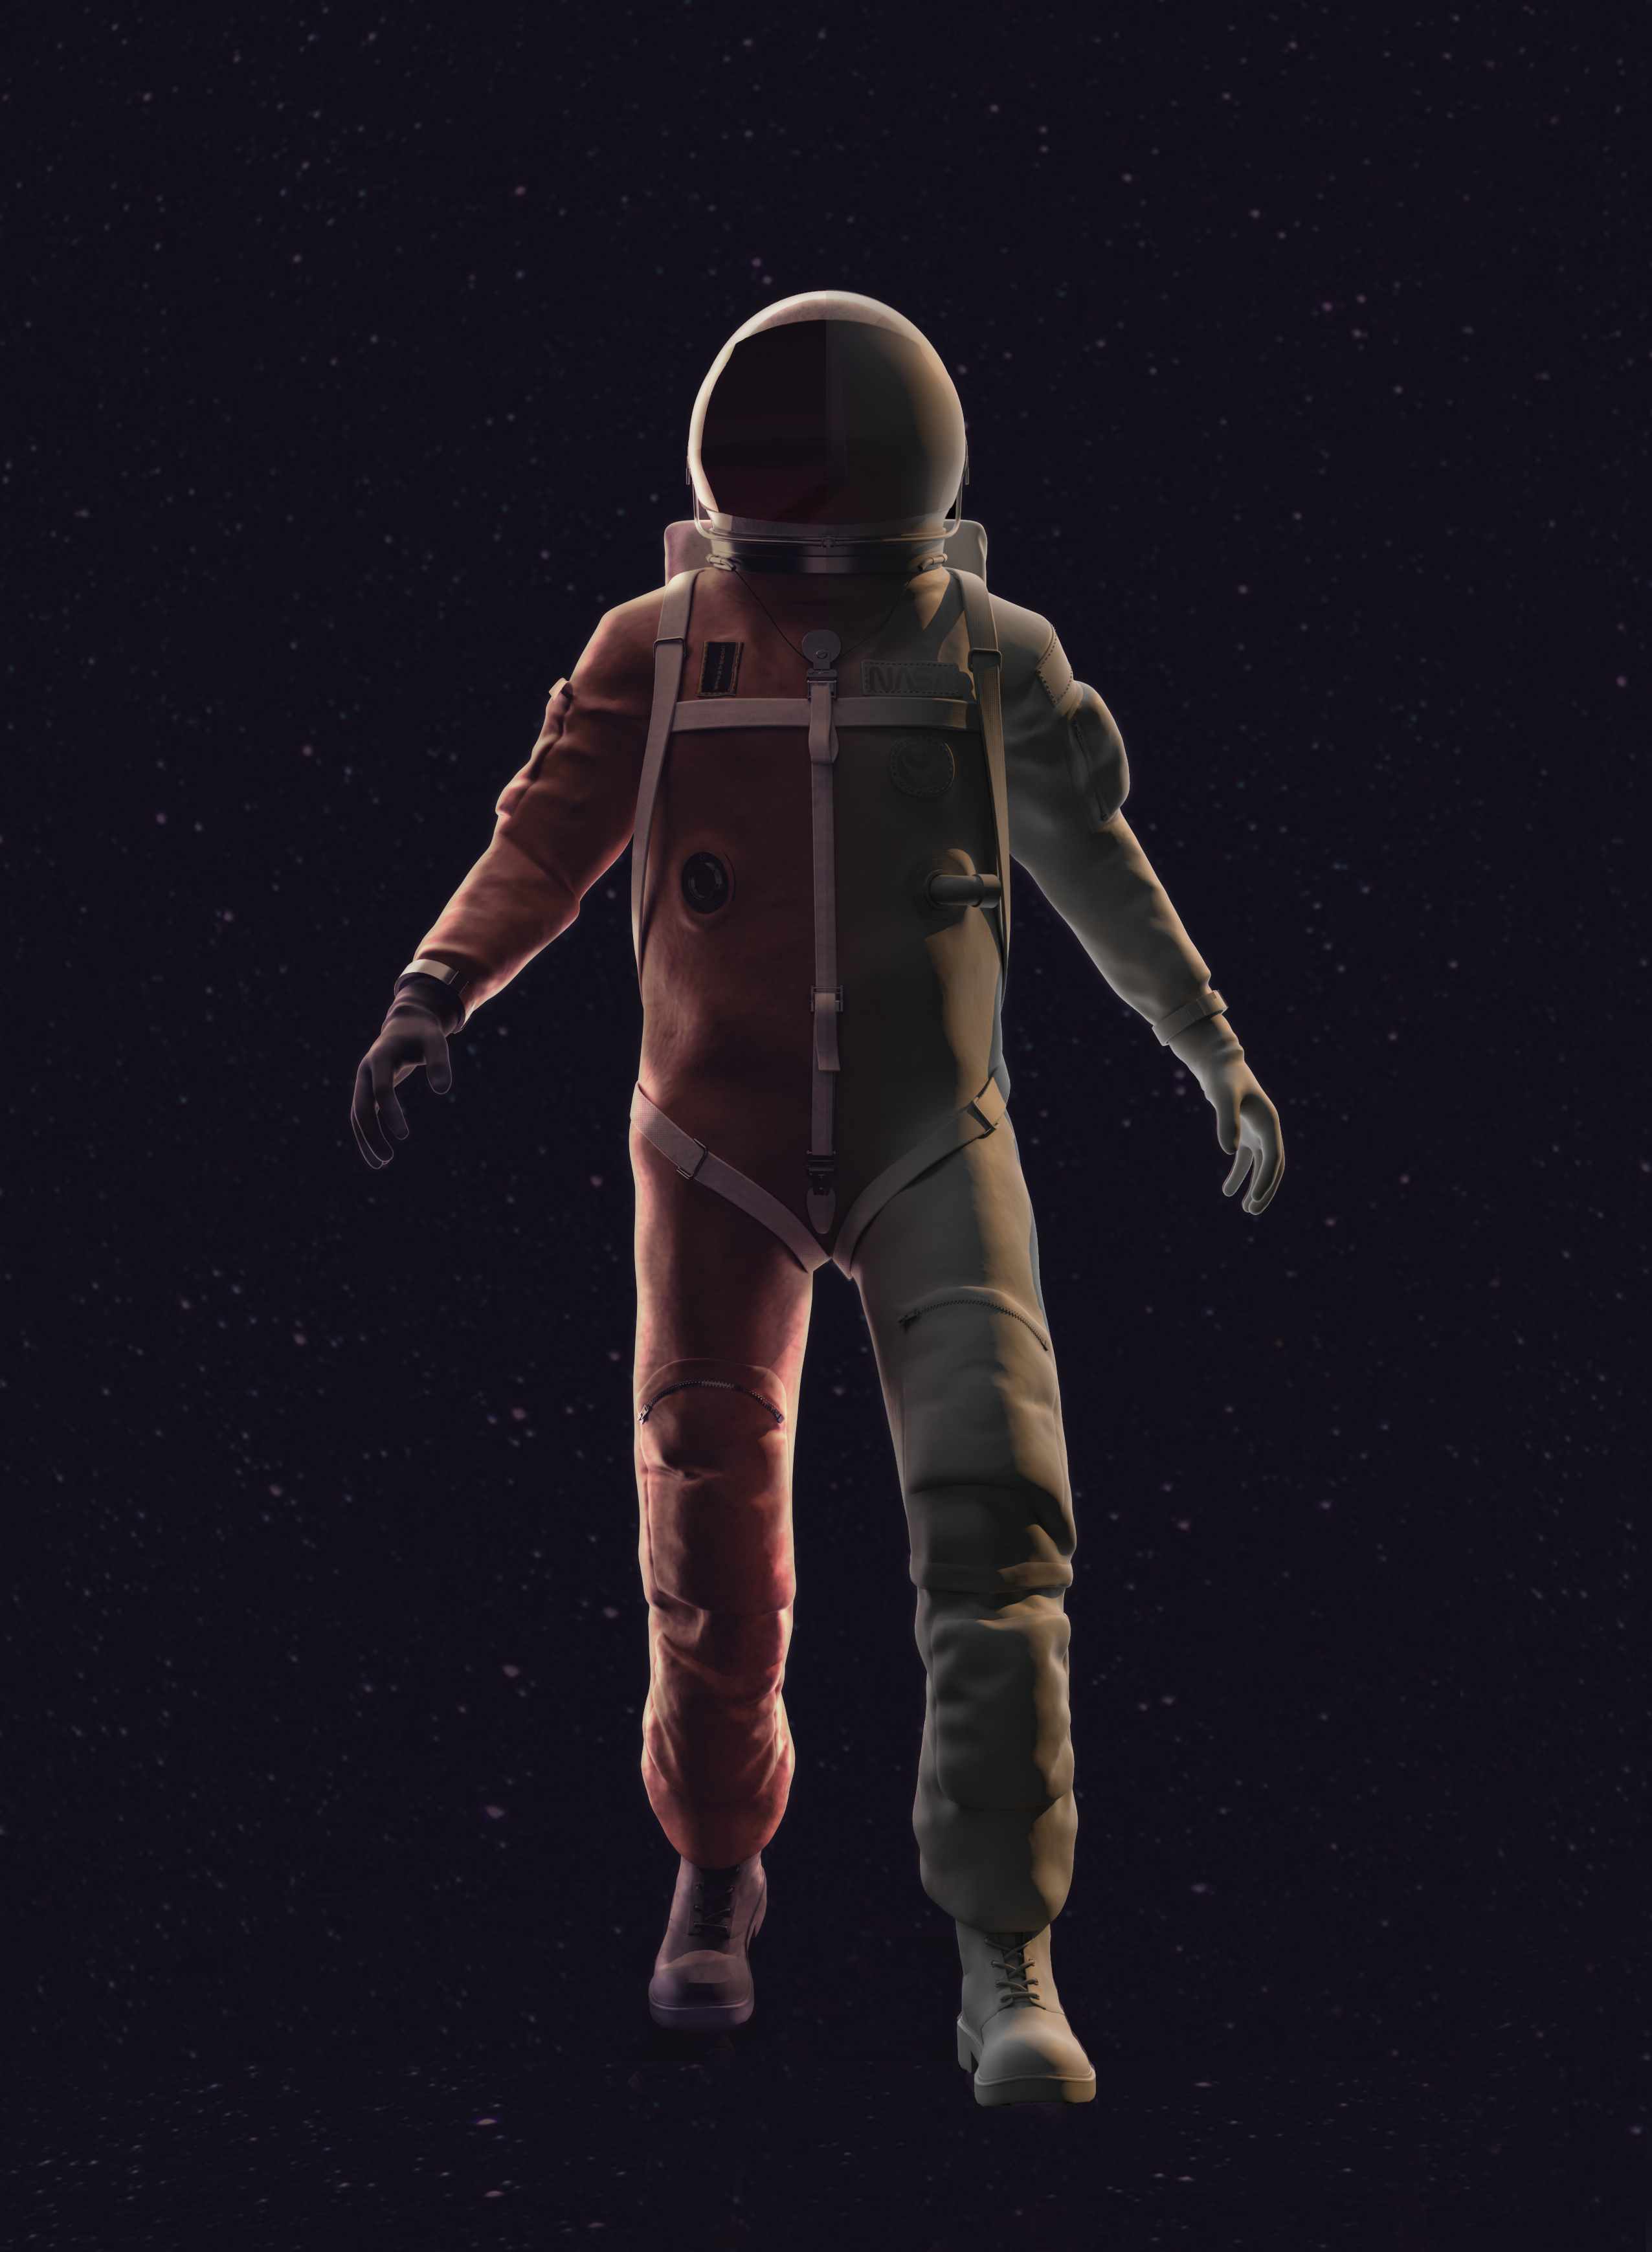 Astronaut_compoMIX.jpg